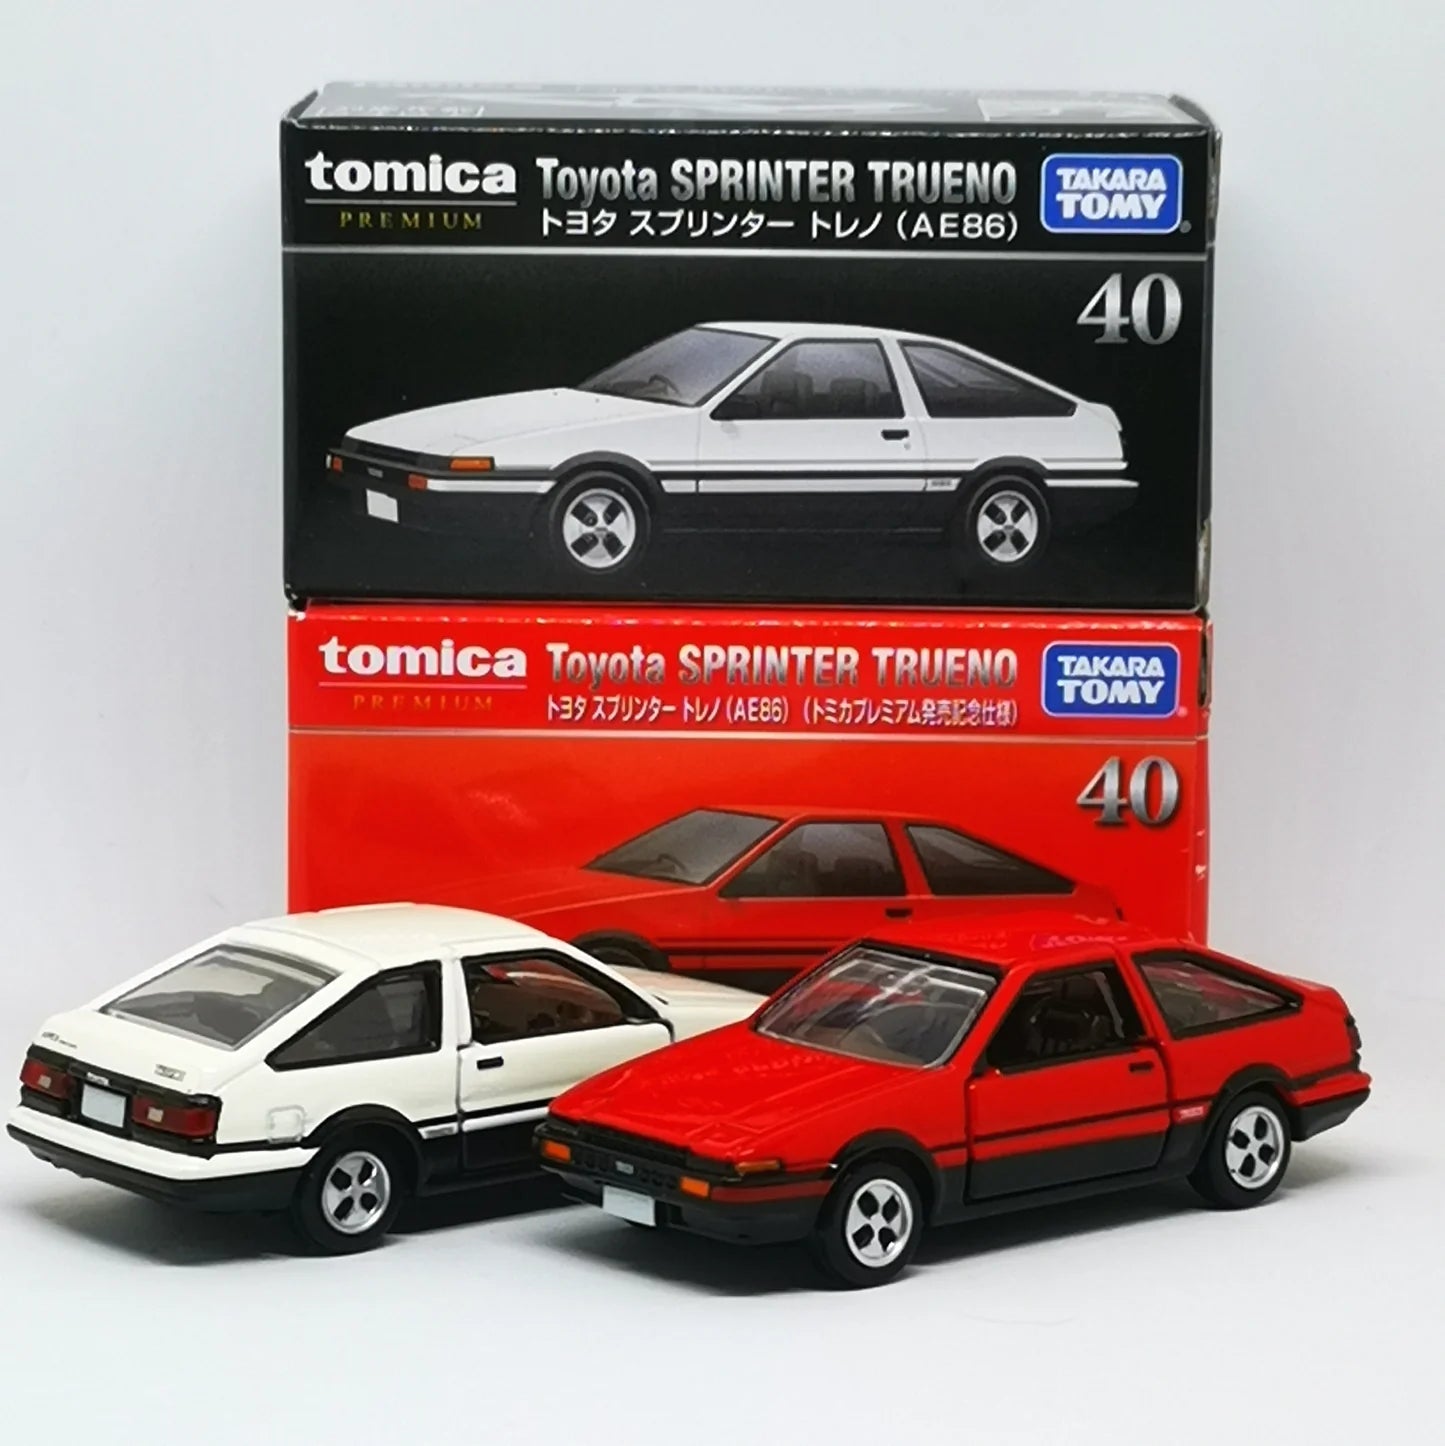 Tomica Premium No.40 Toyota Sprinter Trueno AE86 (Red) - First edition